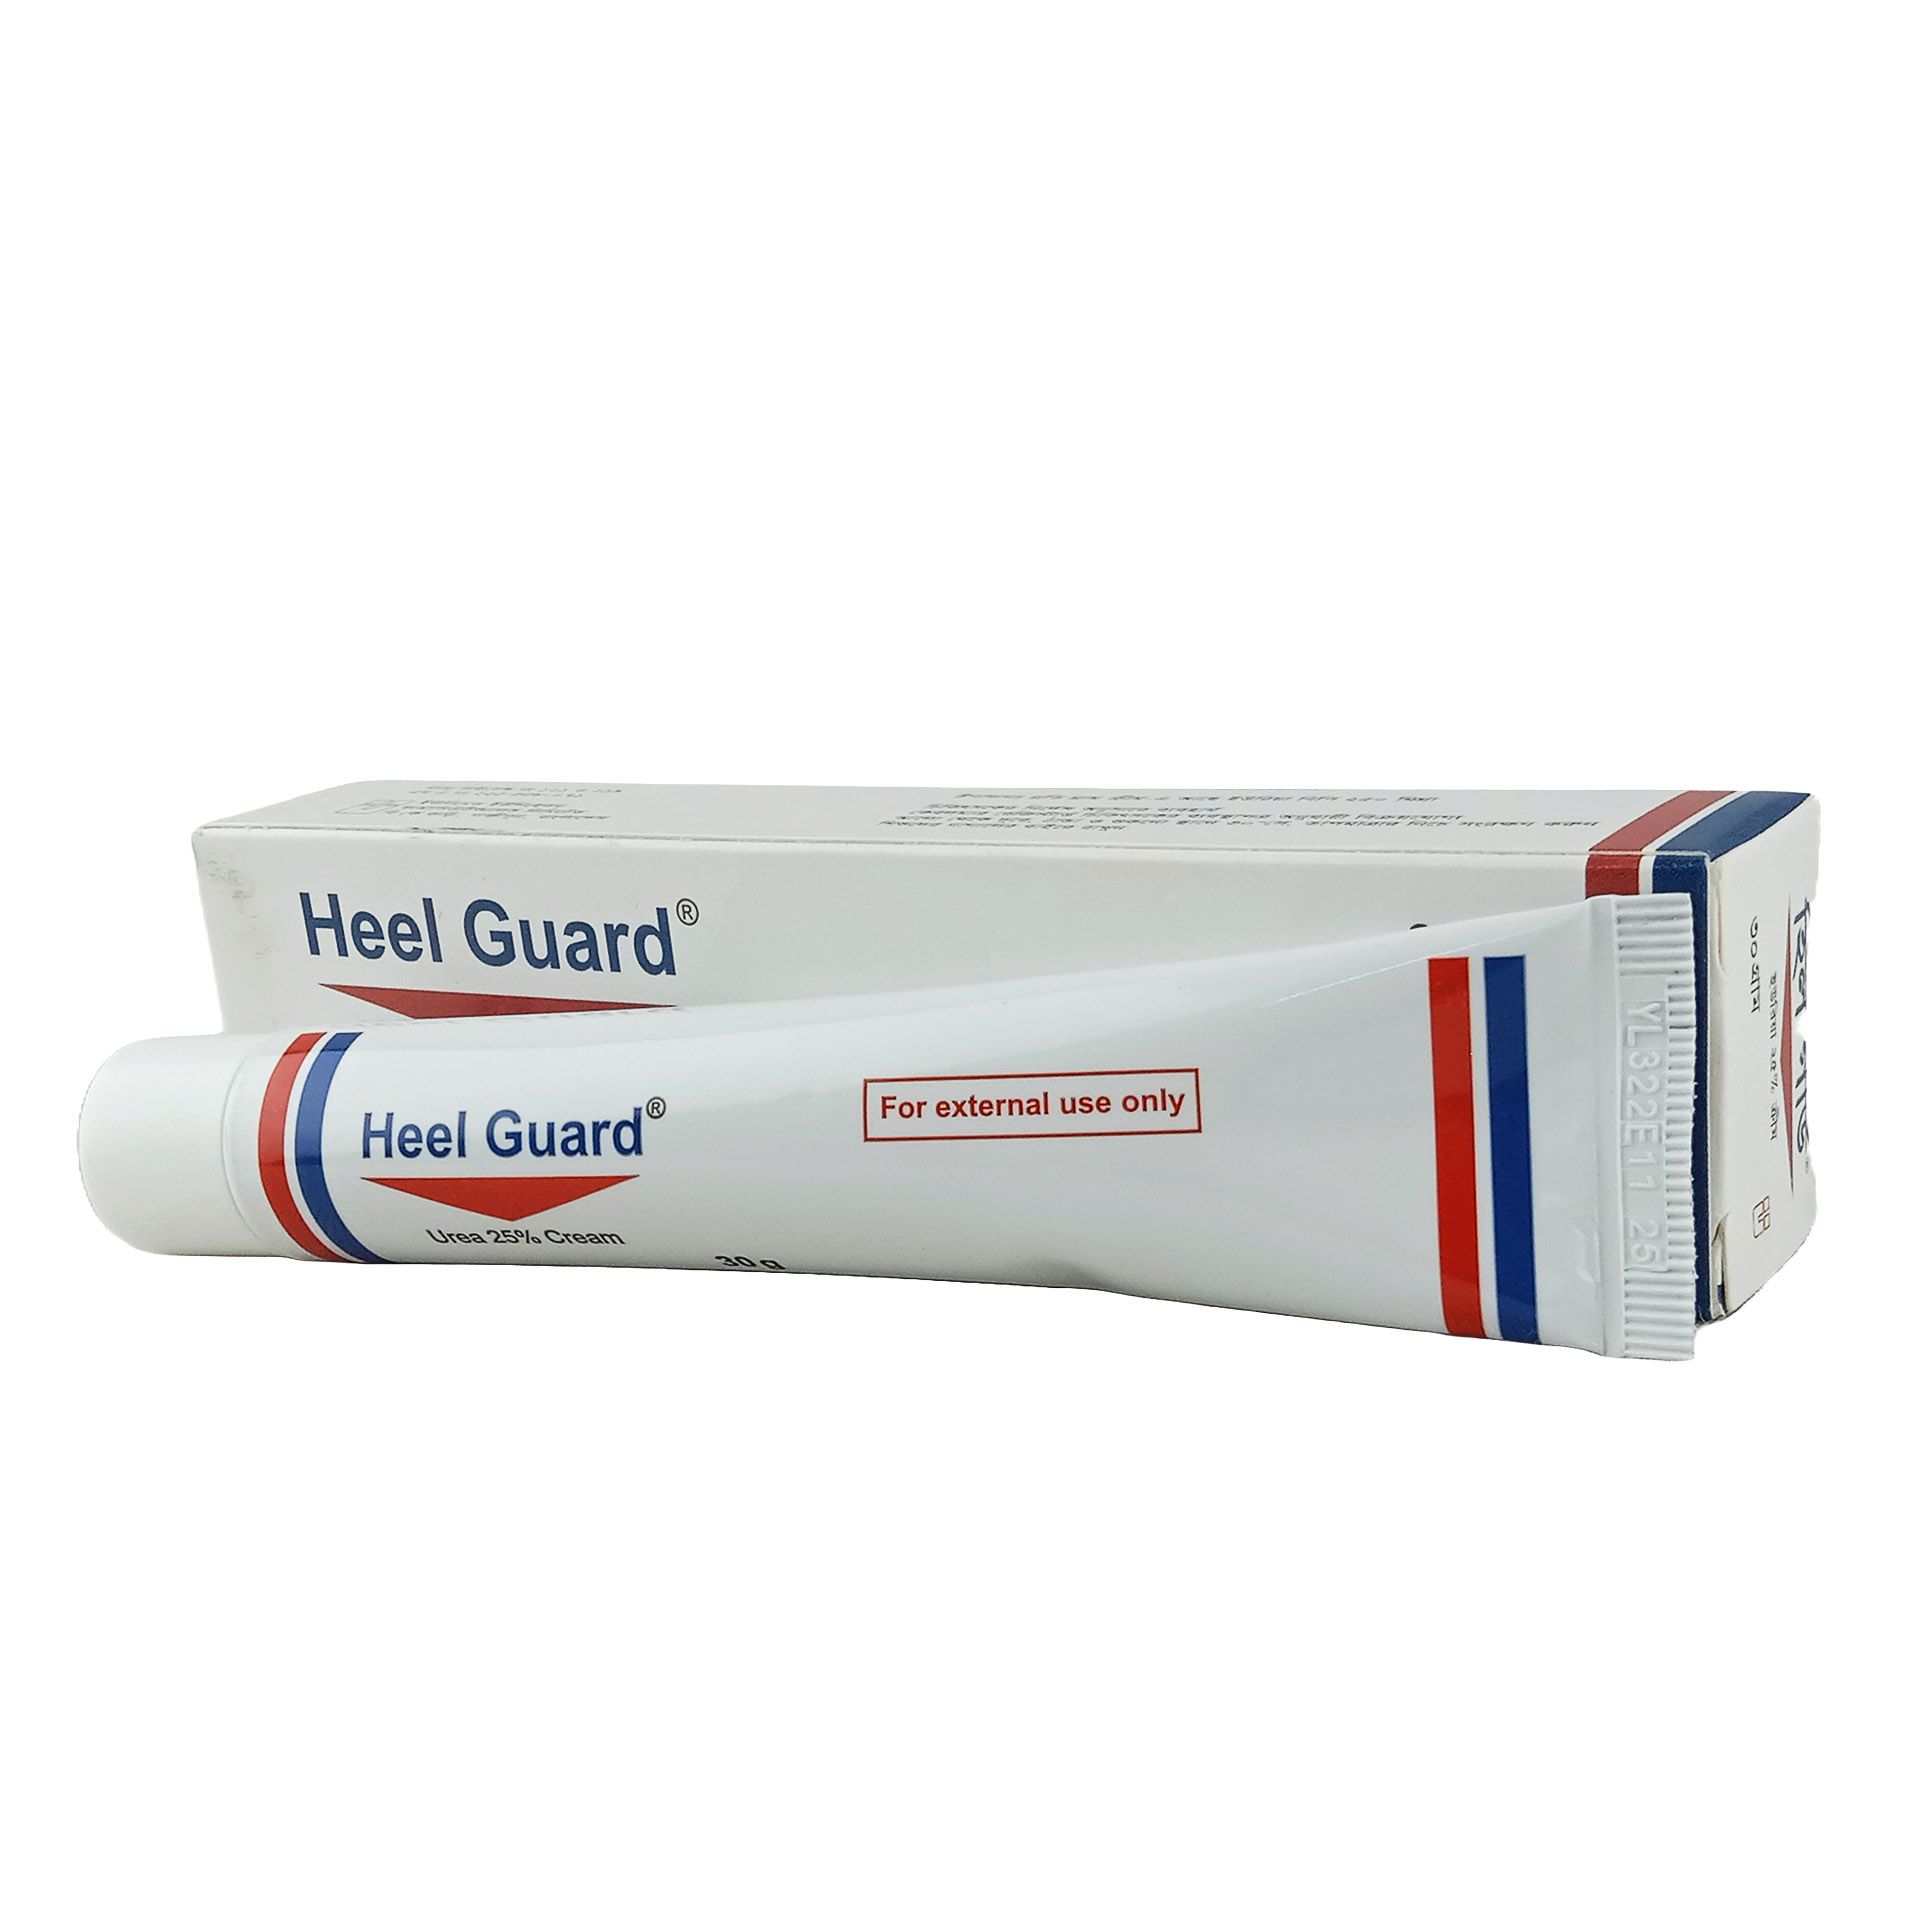 Heel Guard 0.25% Cream